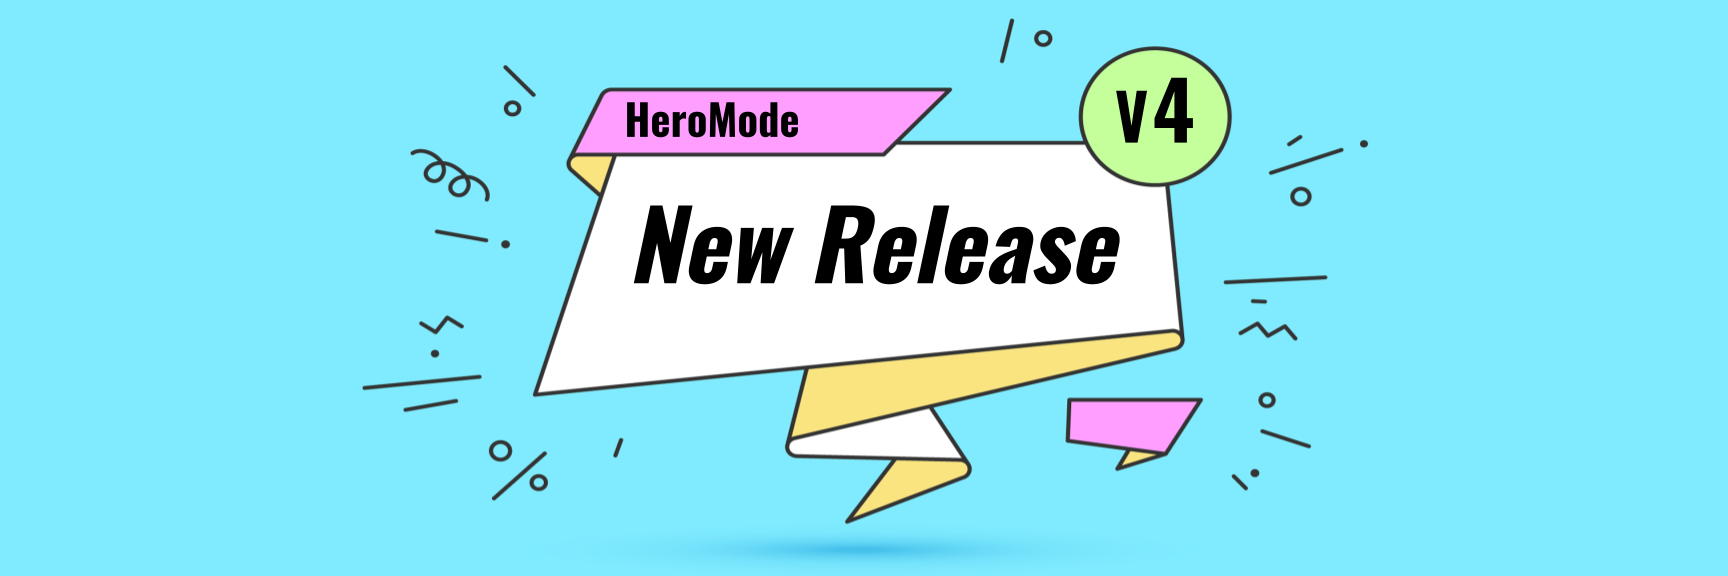 HeroMode v4 is now released!